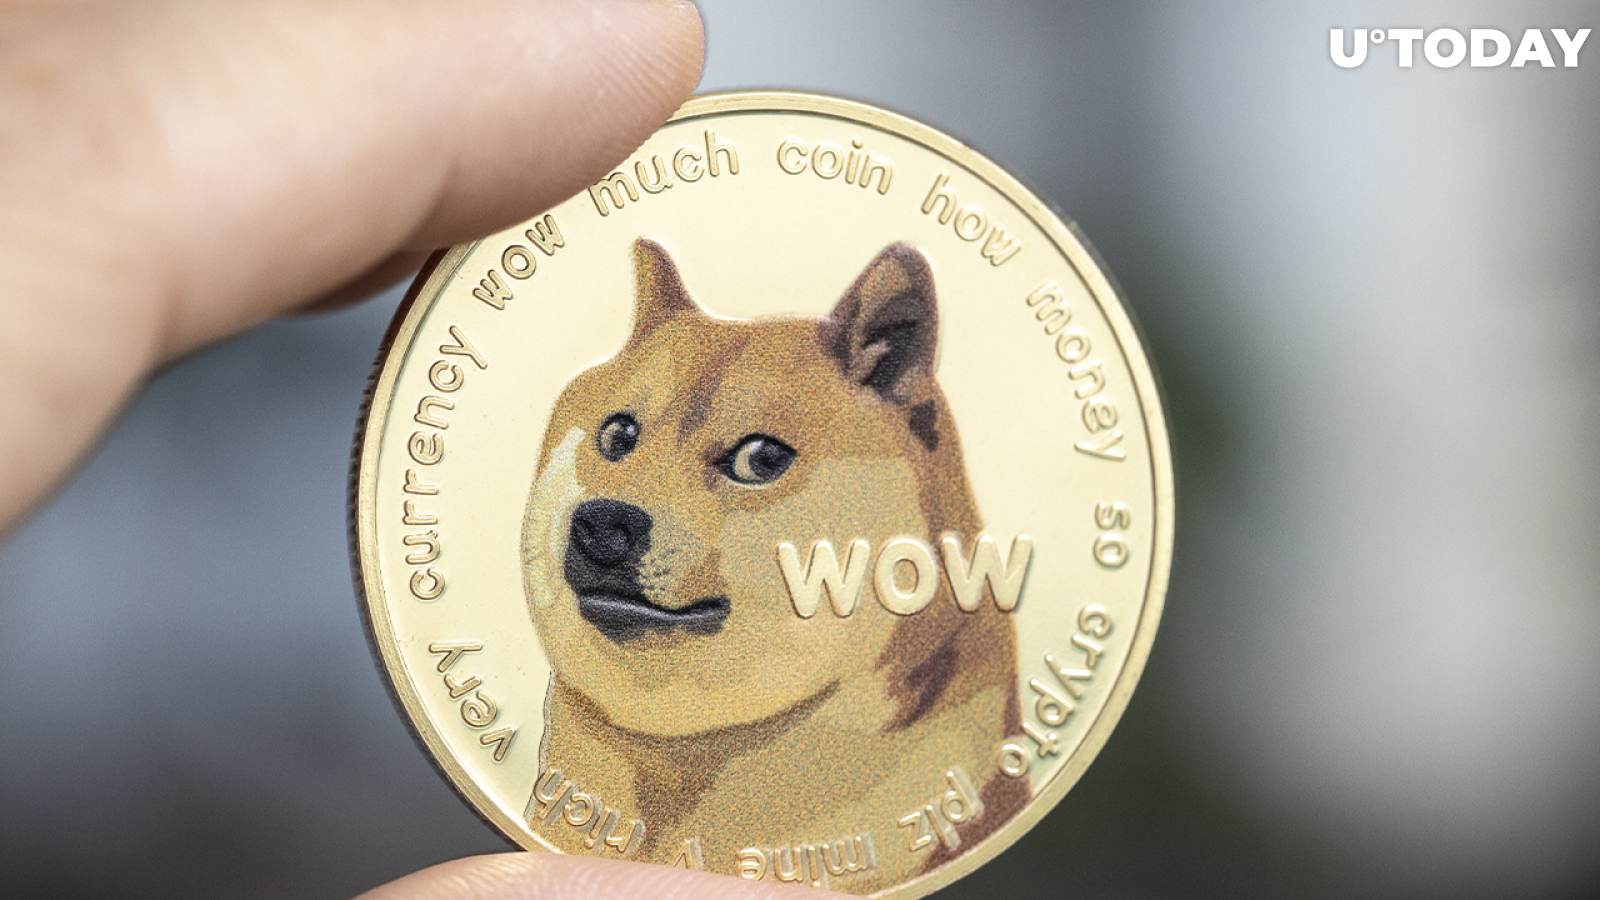 Dogecoin Price Prediction - 